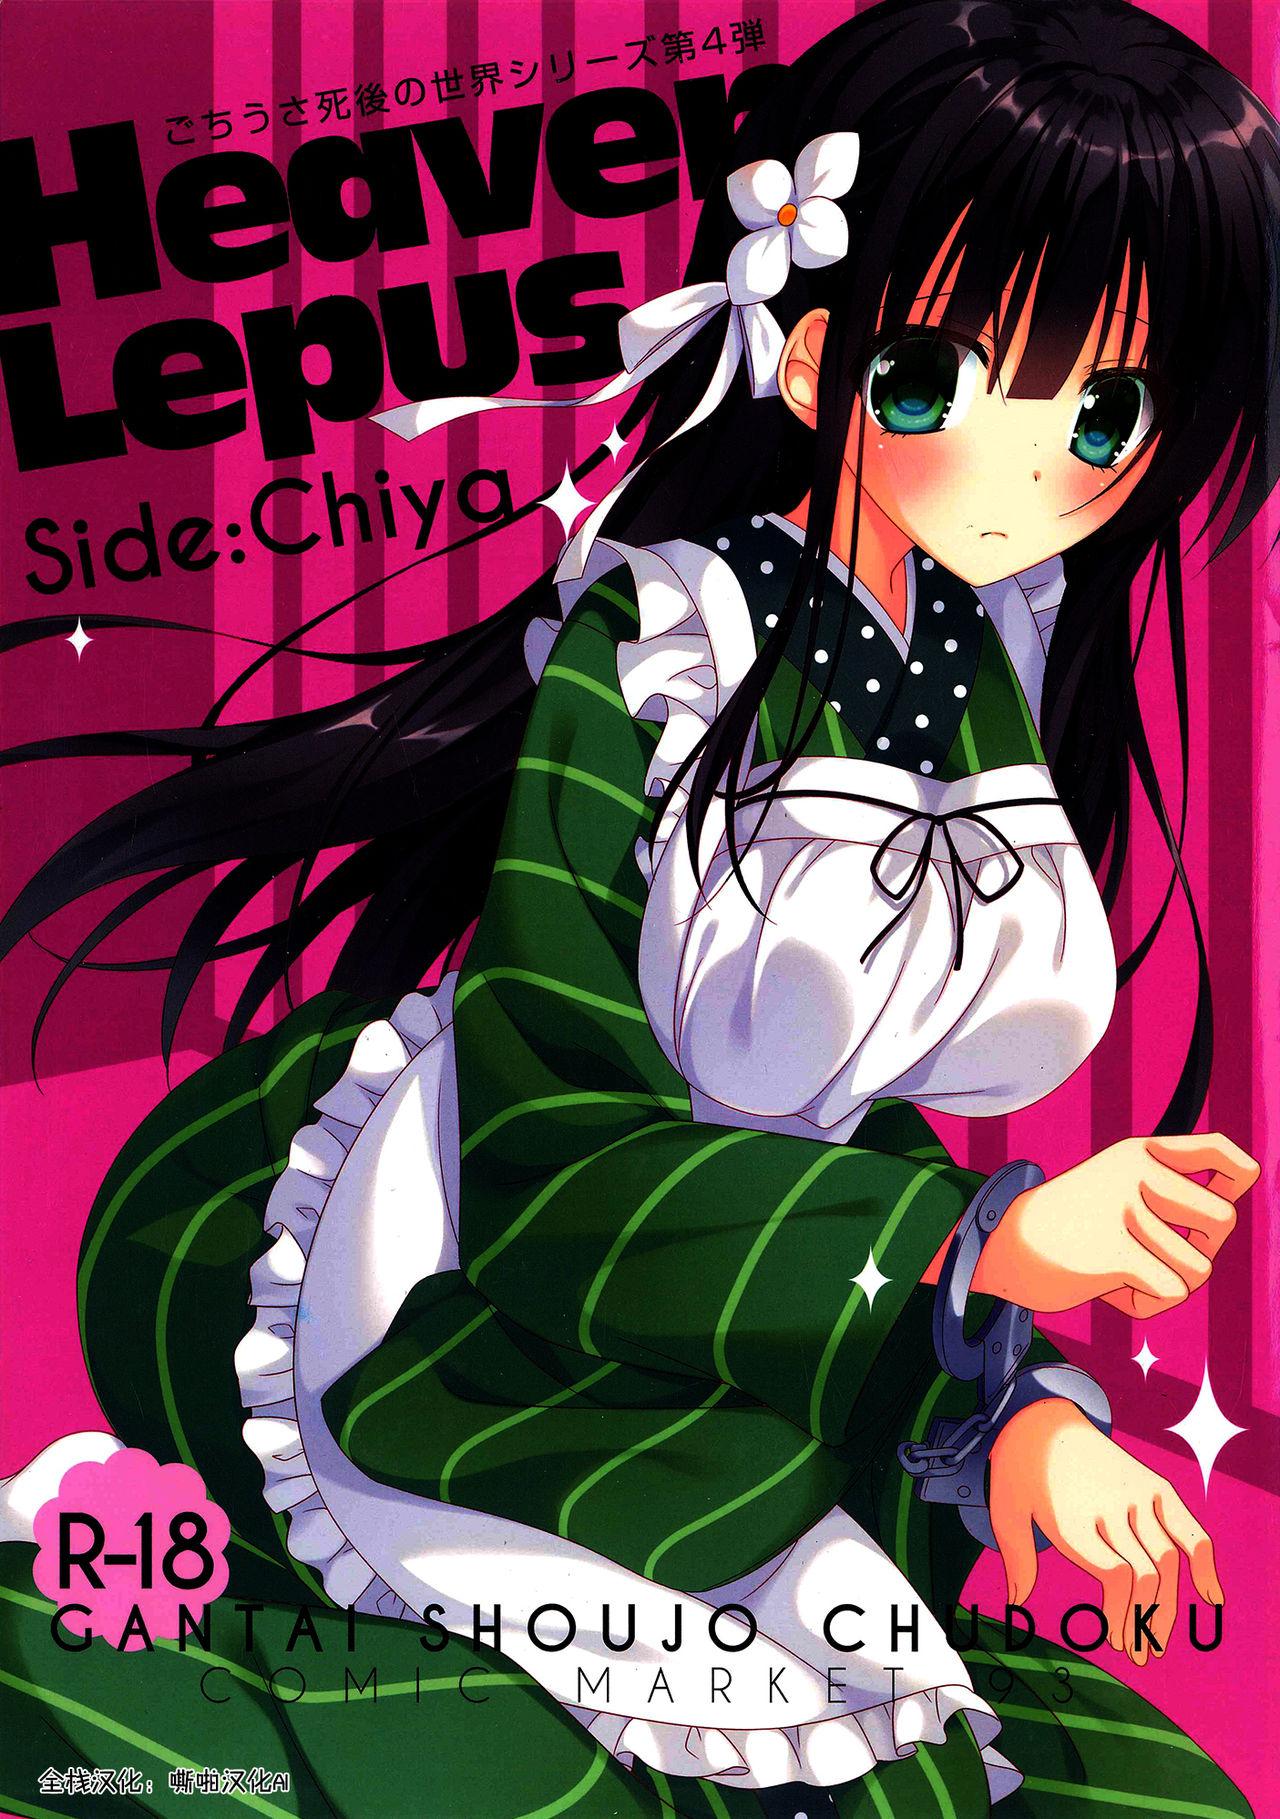 Heaven Lepus4 Side:Chiya 0